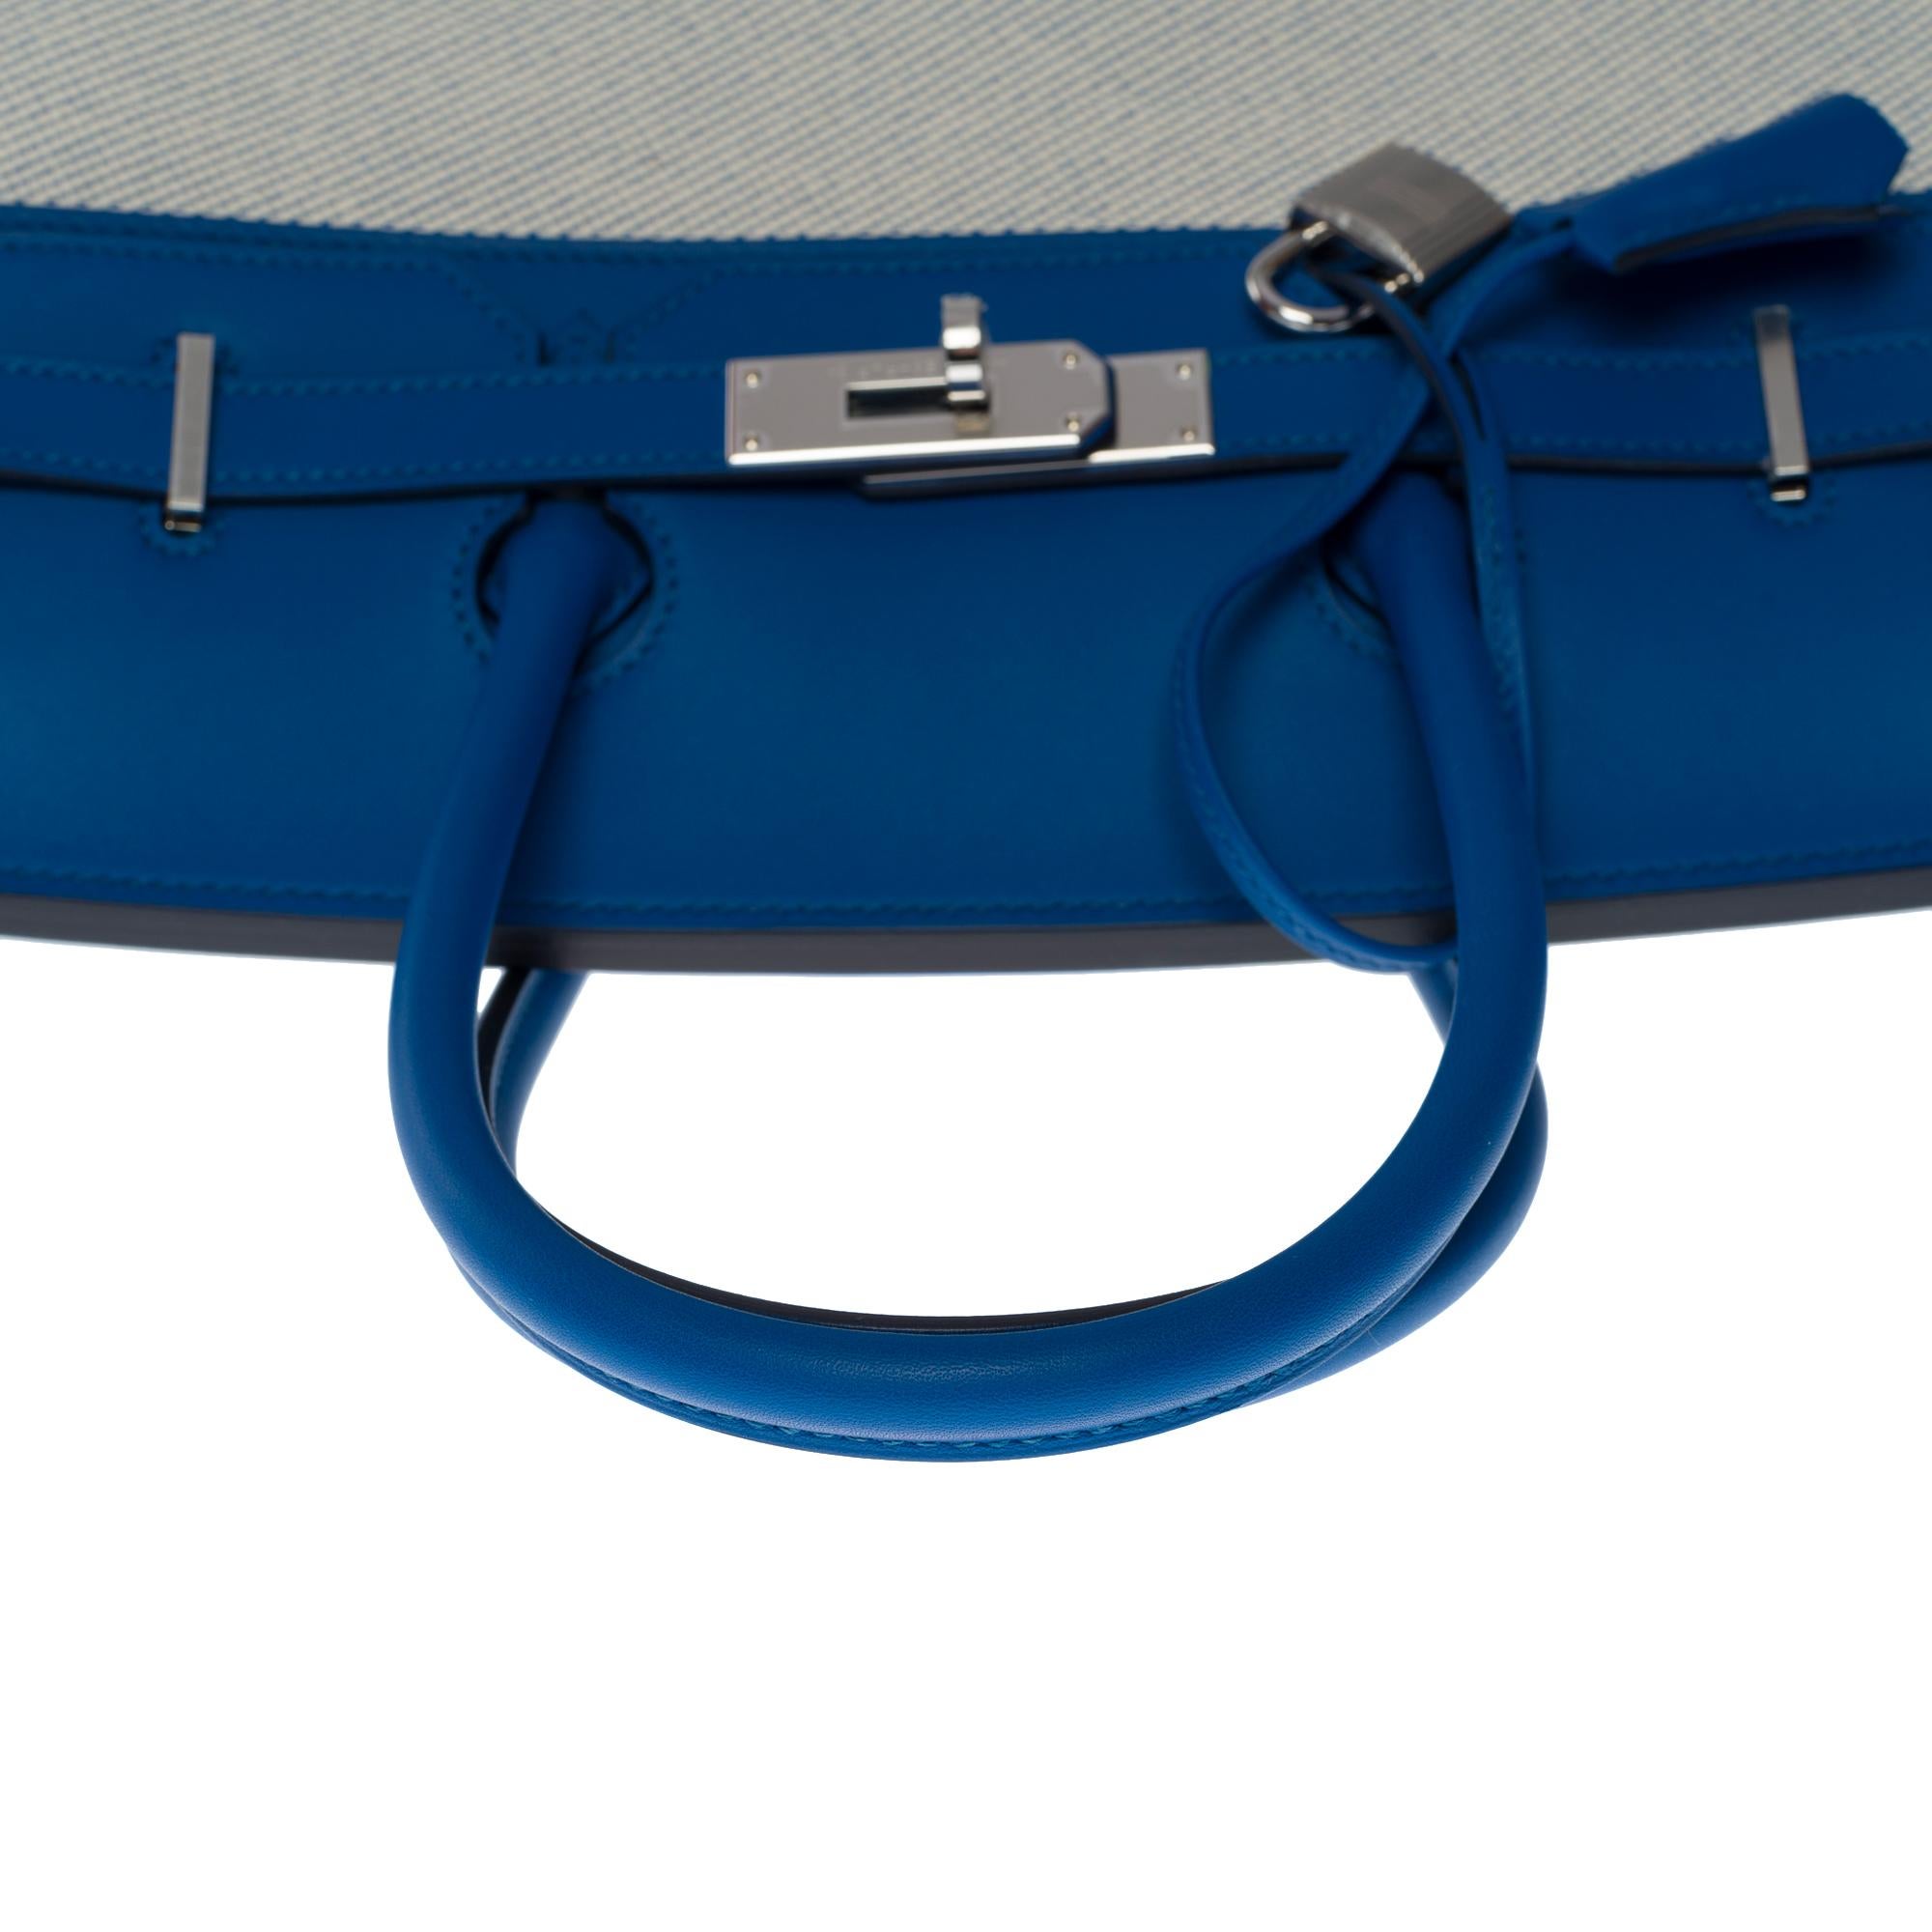 New Fray Fray Hermès Birkin 35 handbag in beige canvas/blue swift leather, SHW 3